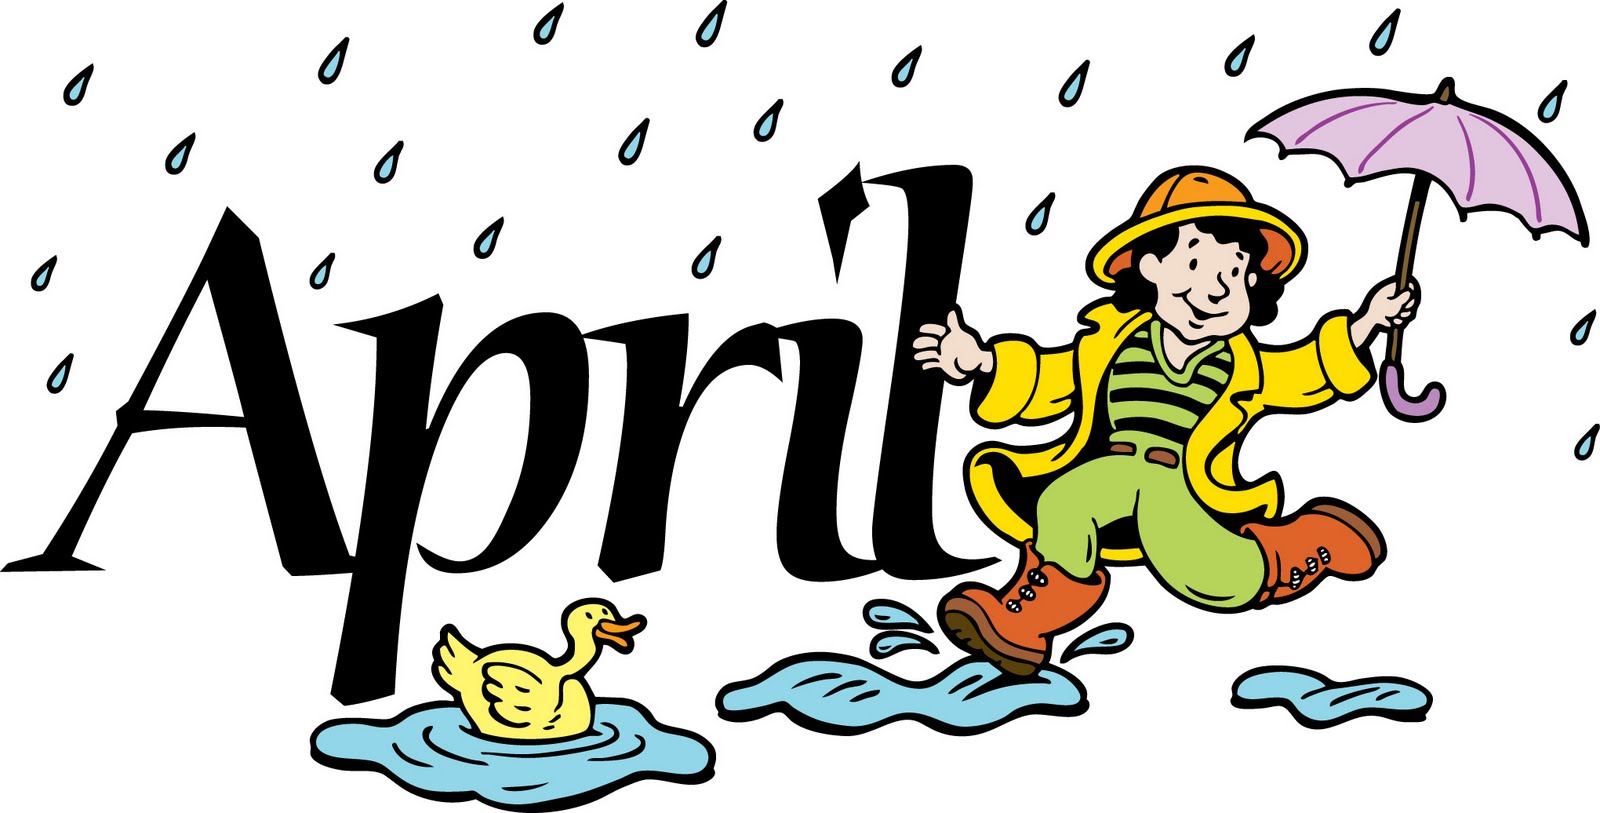 Free month of april clip art clipart